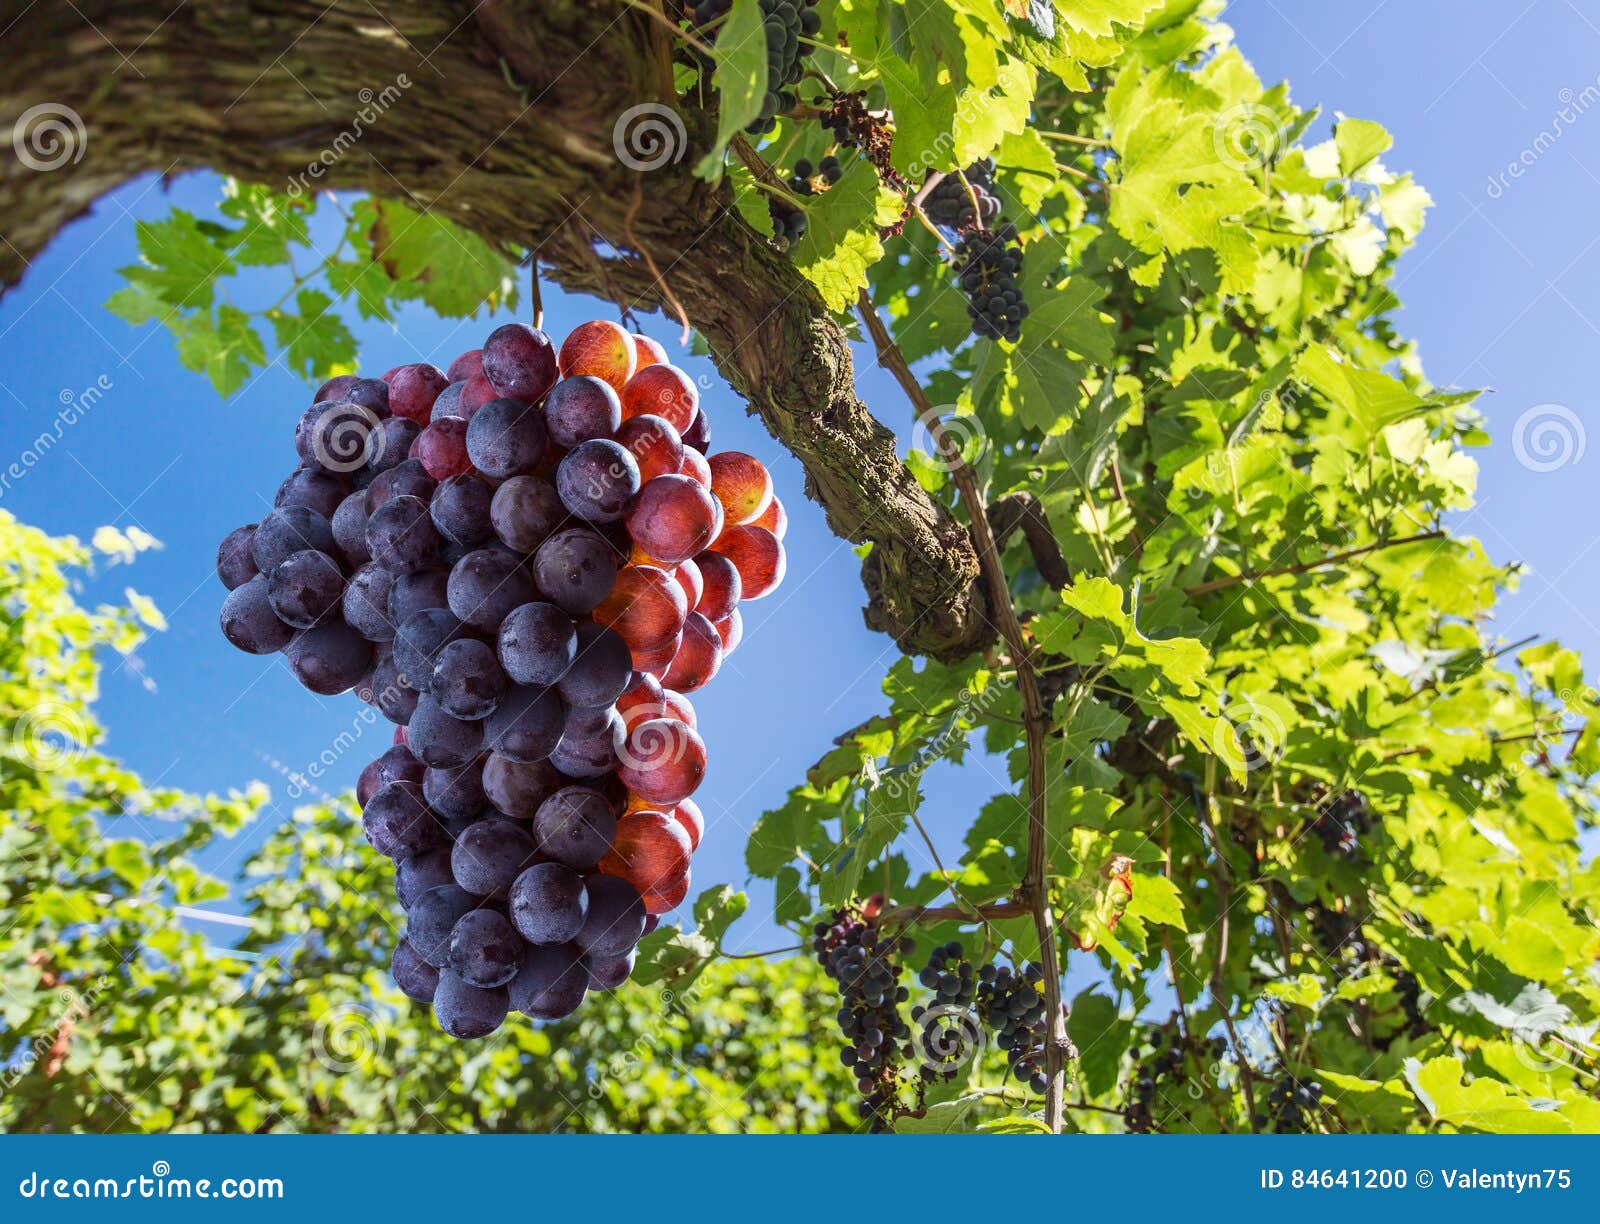 wine grapes on the vine.